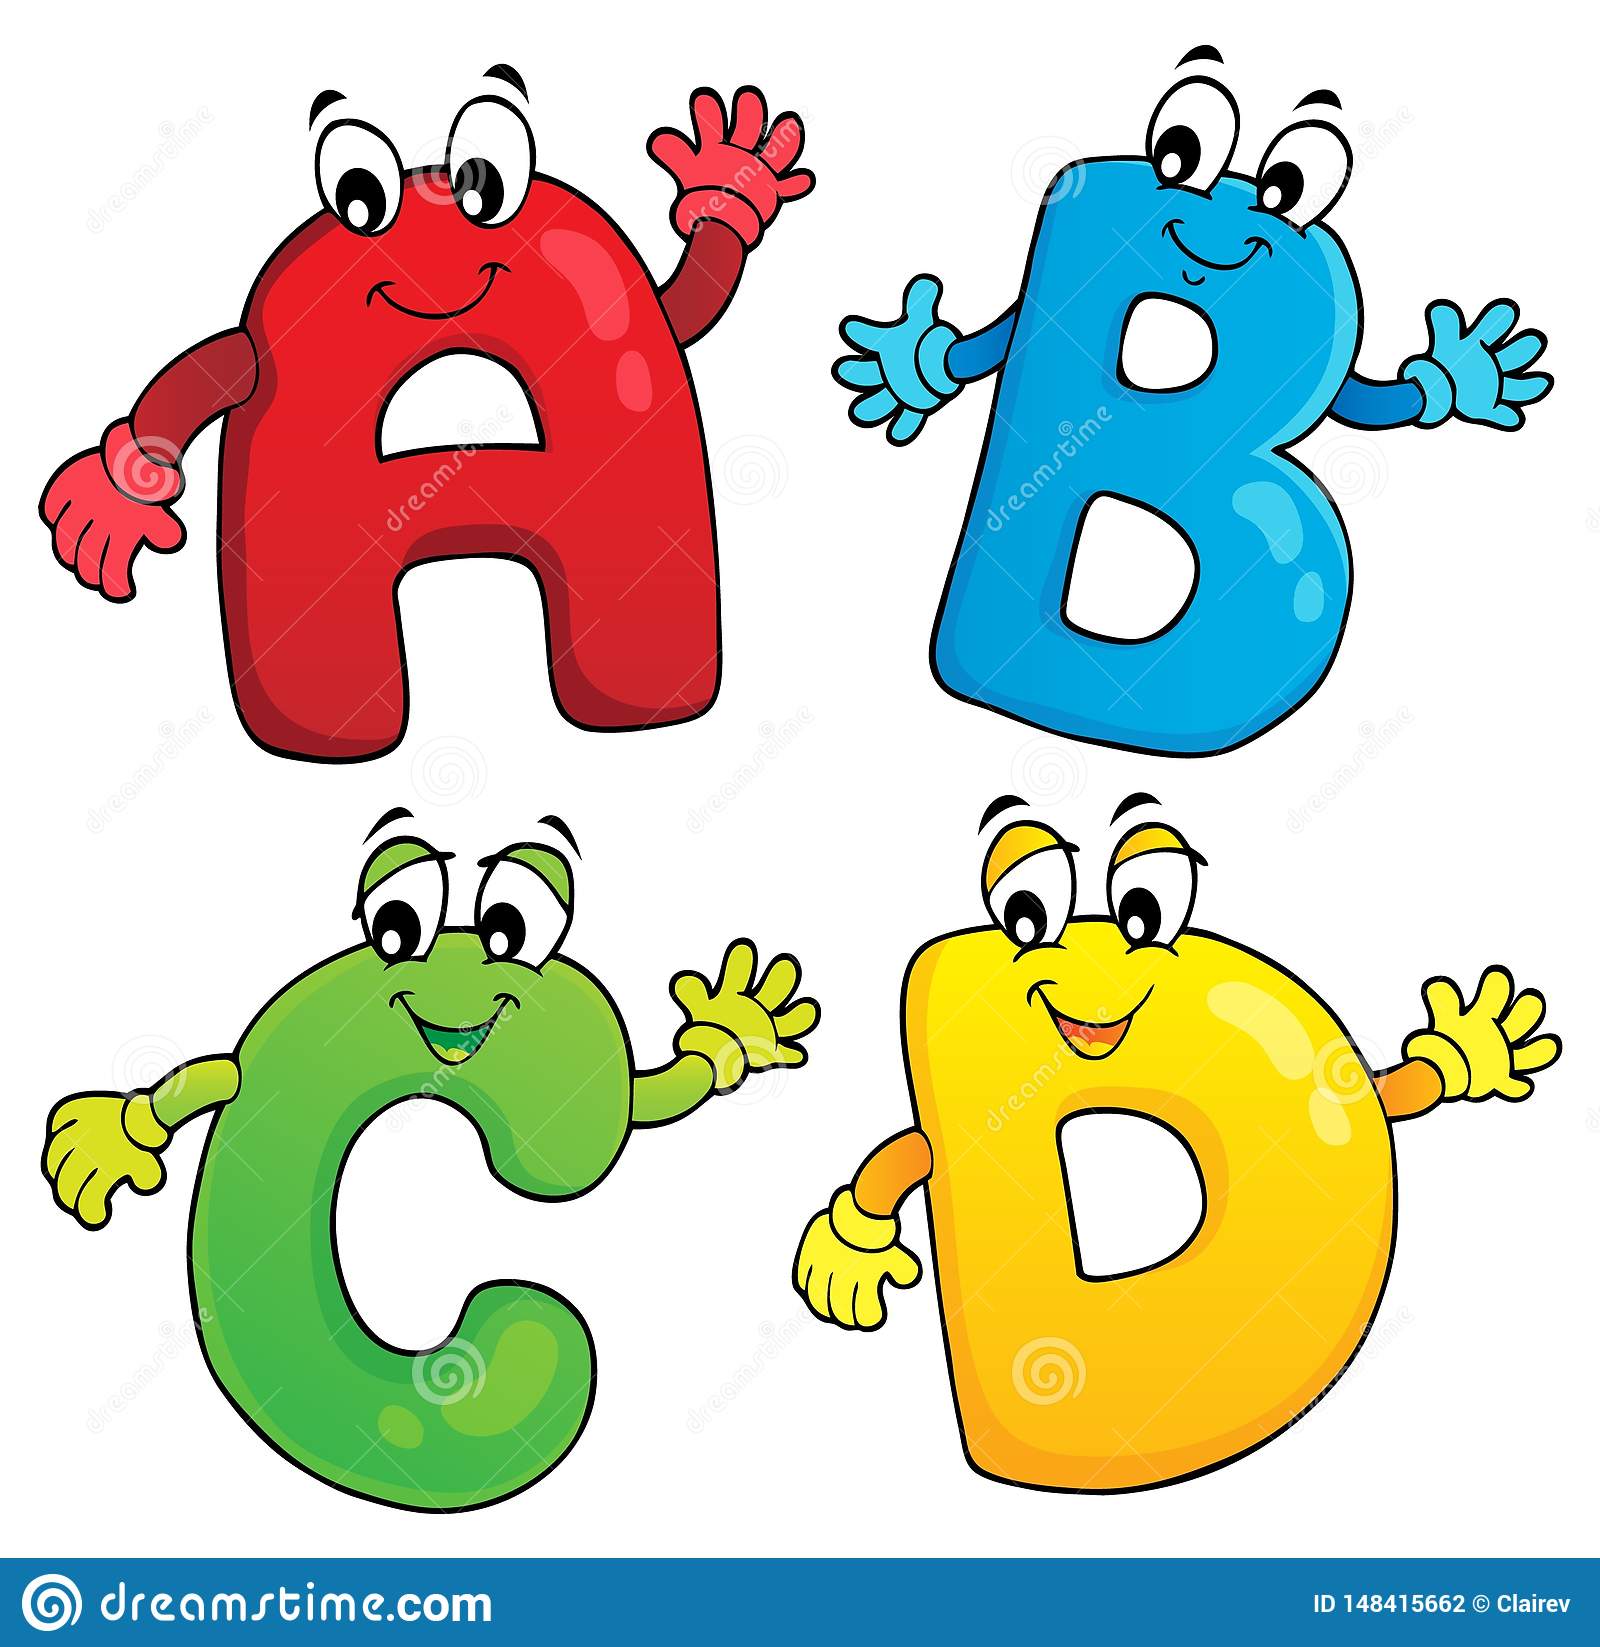 abkd alphabet